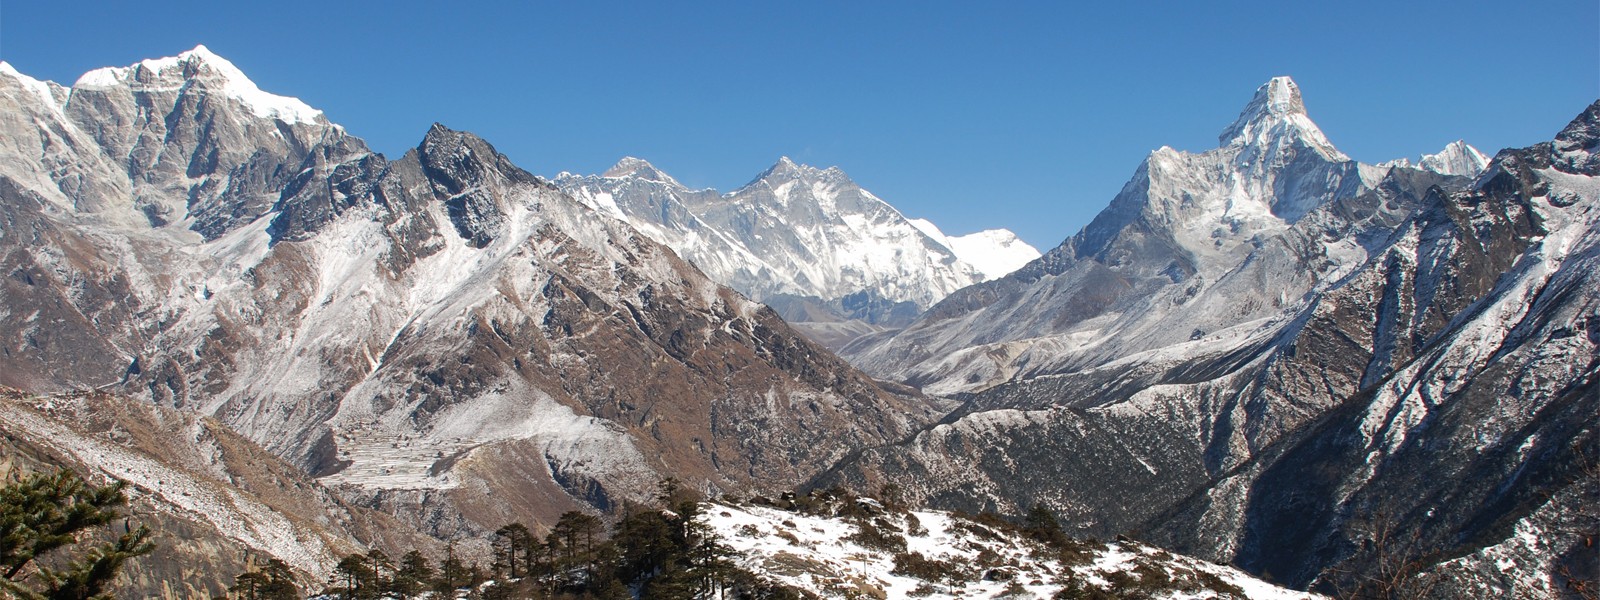 Everest Base Camp Path